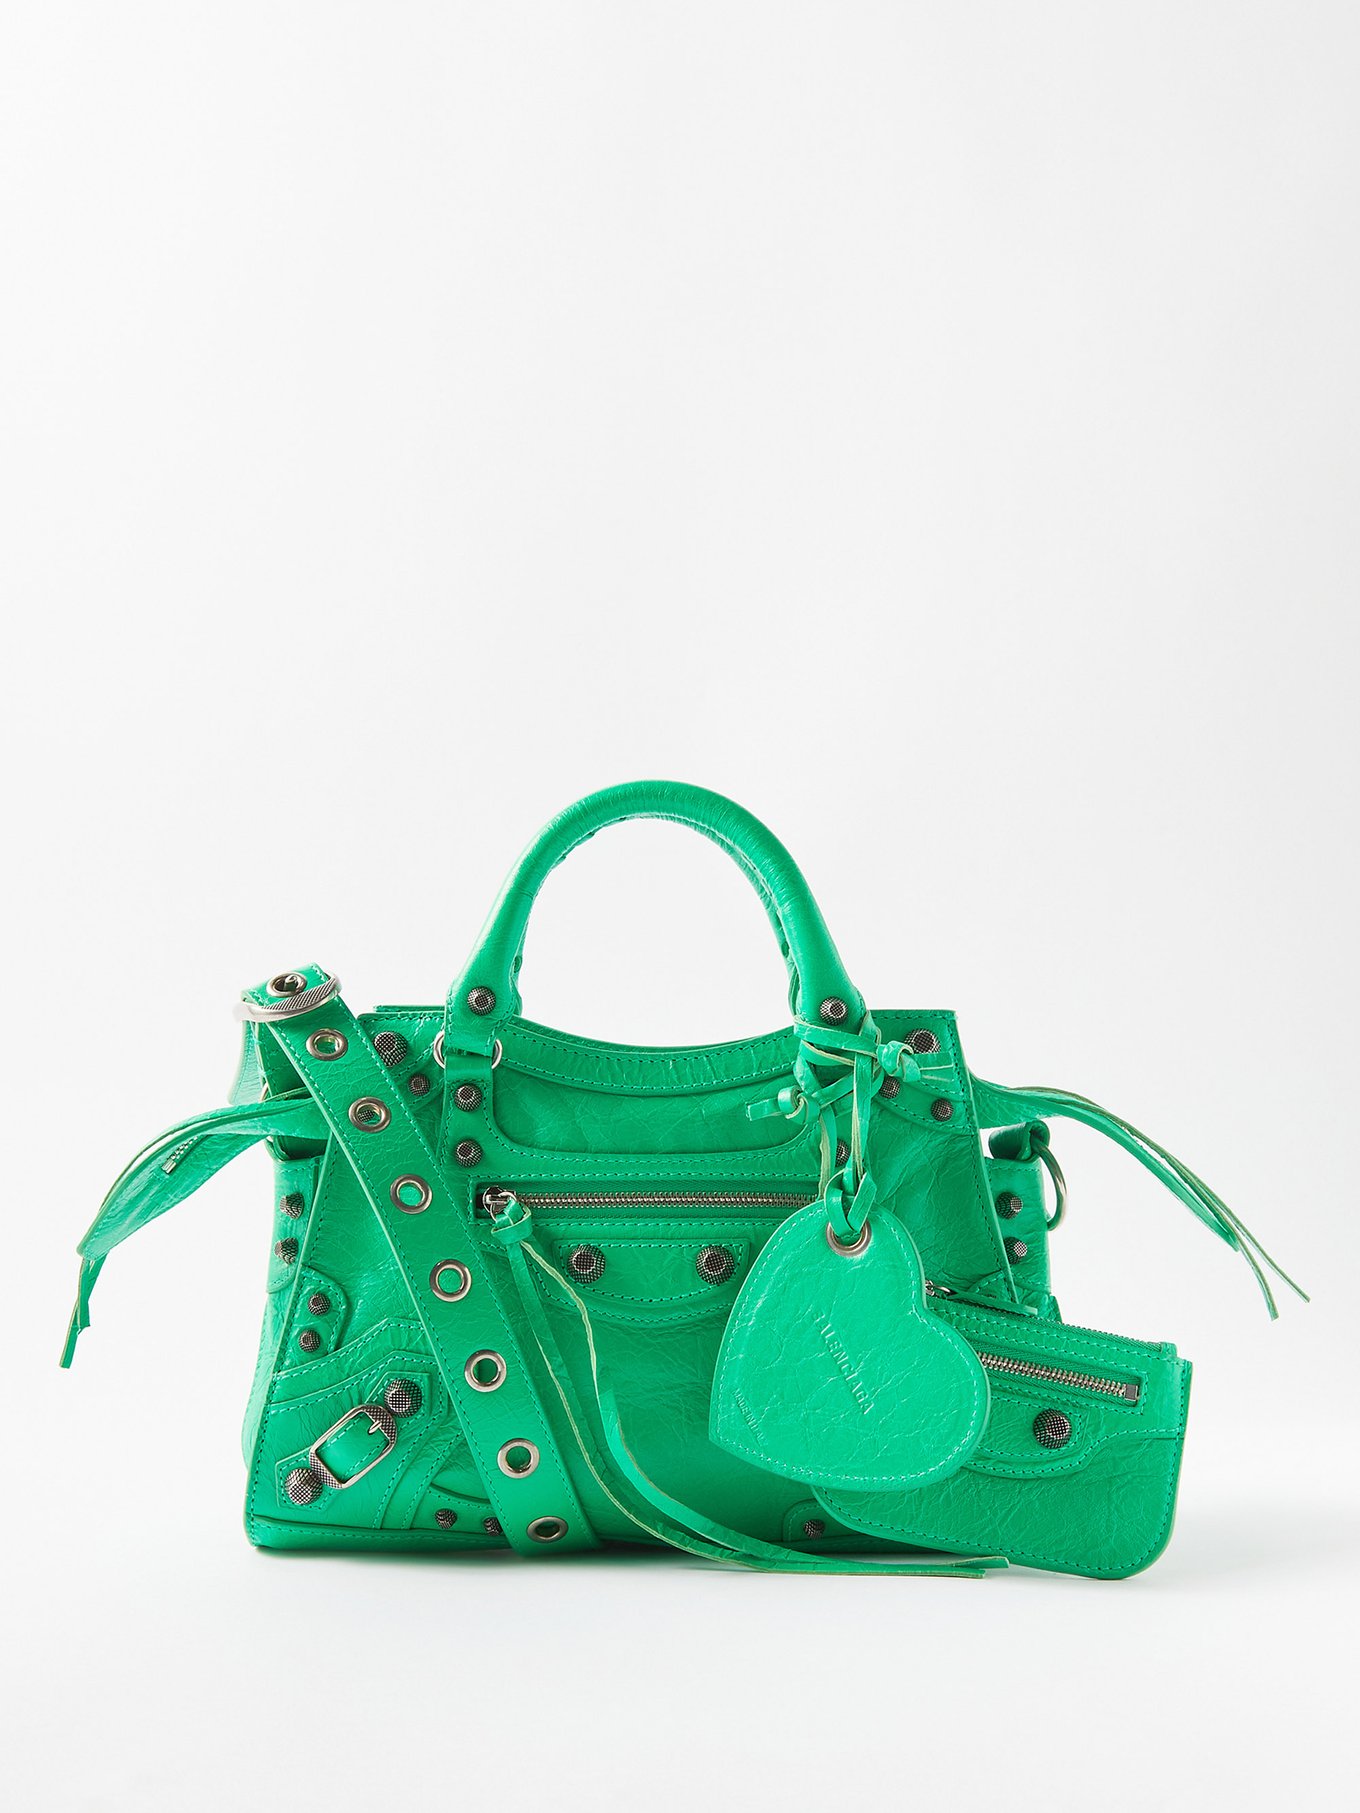 Balenciaga Mini Classic City Leather Bag in Green